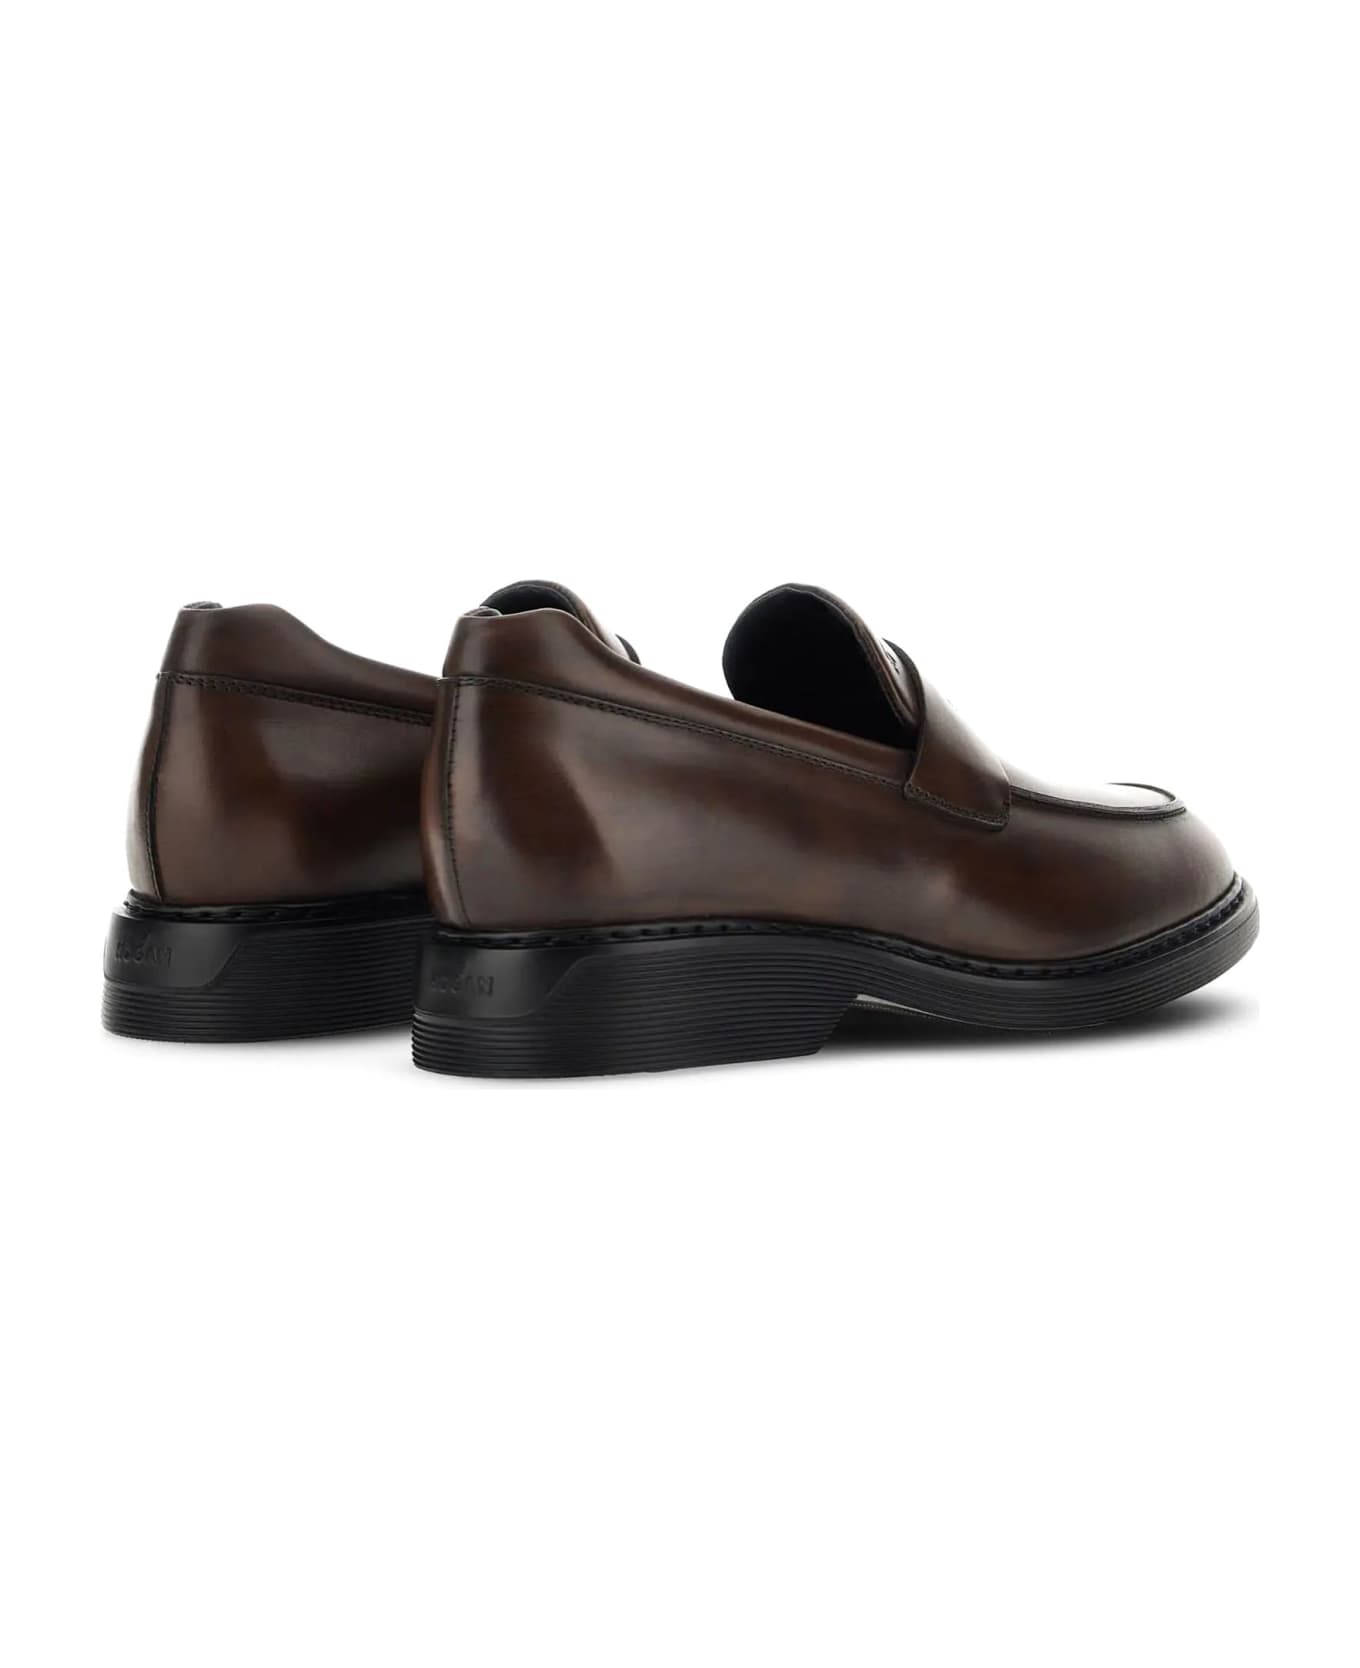 Hogan Flat Shoes Brown - Brown